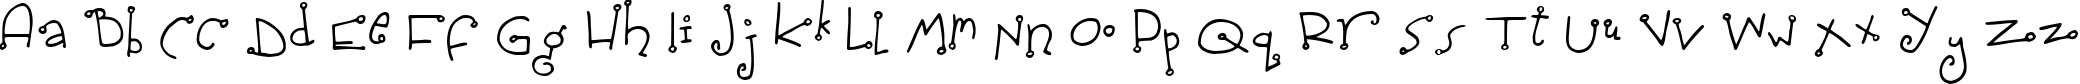 Пример написания английского алфавита шрифтом Spidershank